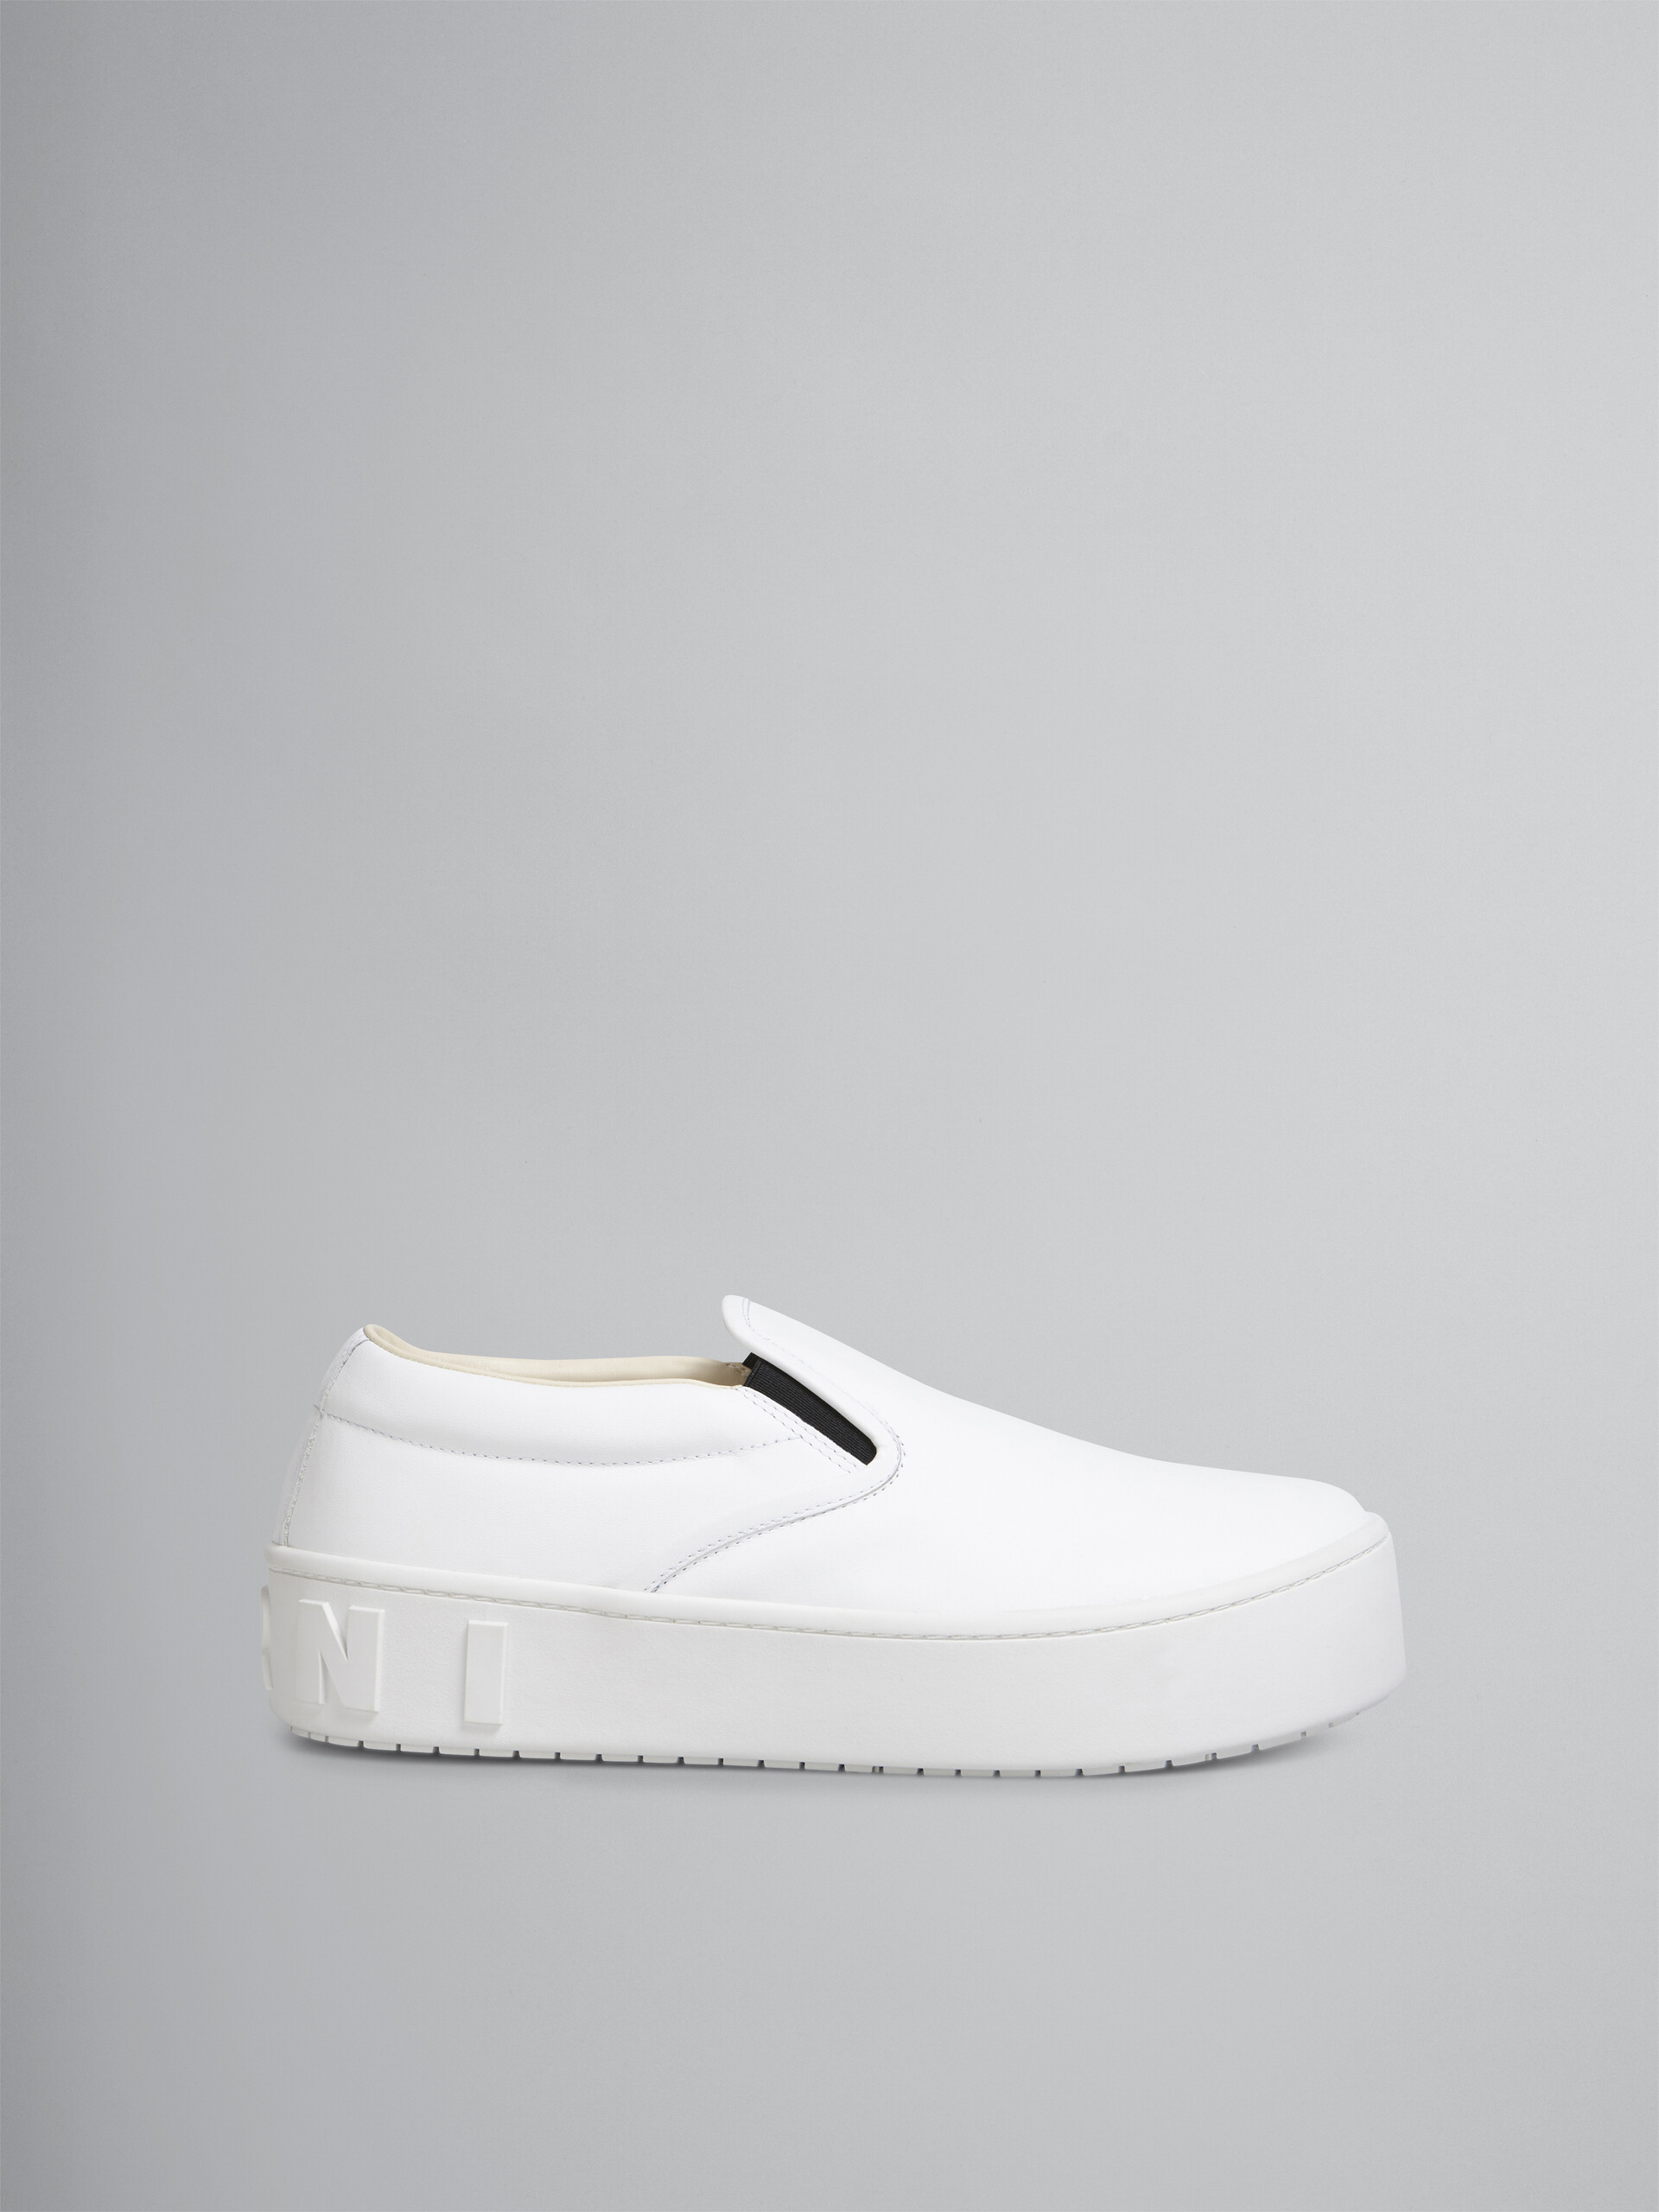 Sneaker slip-on in vitello bianco con maxi logo Marni in rilievo - Sneakers - Image 1